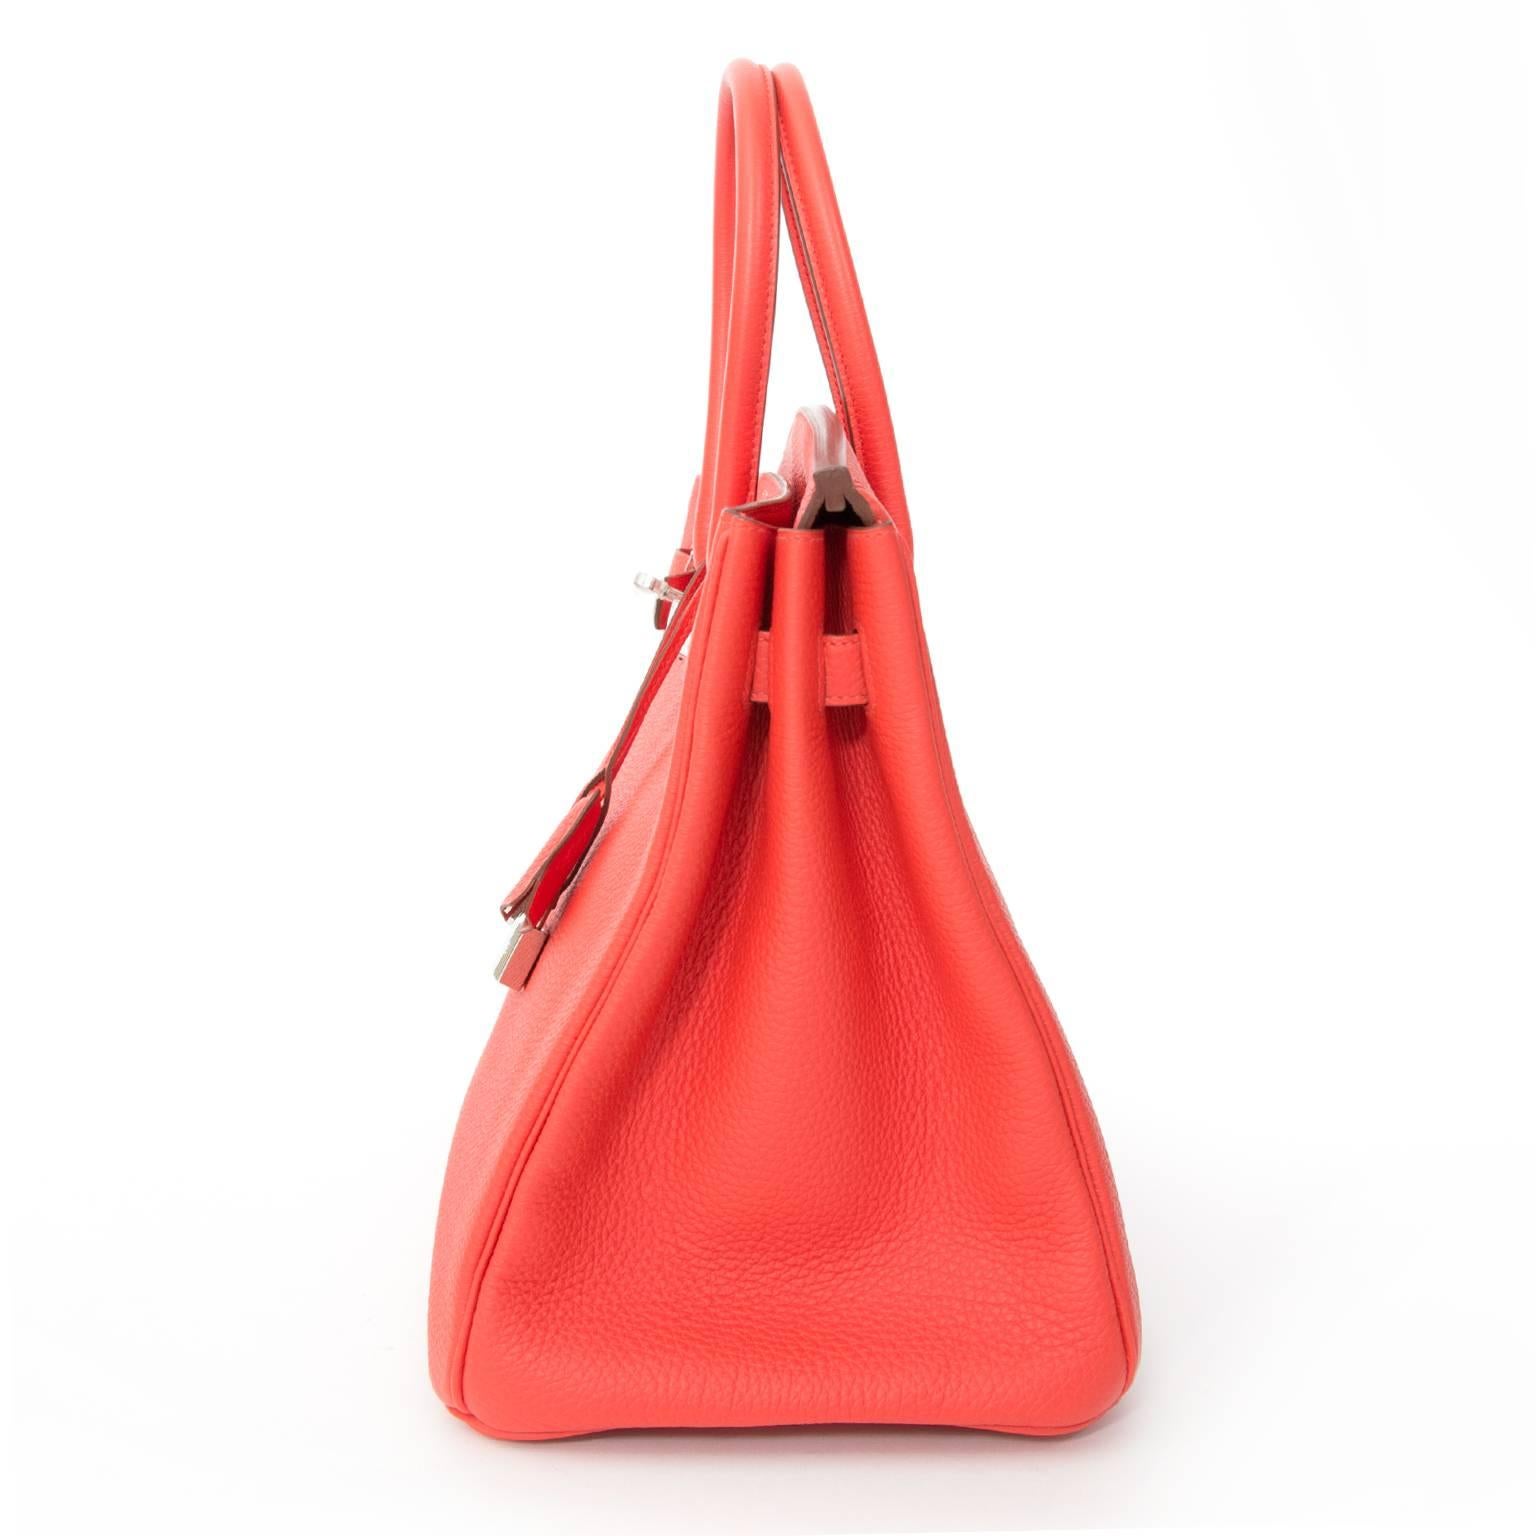 BRAND NEW Hermès Birkin Bag Togo Capucine PHW 35cm  Damen